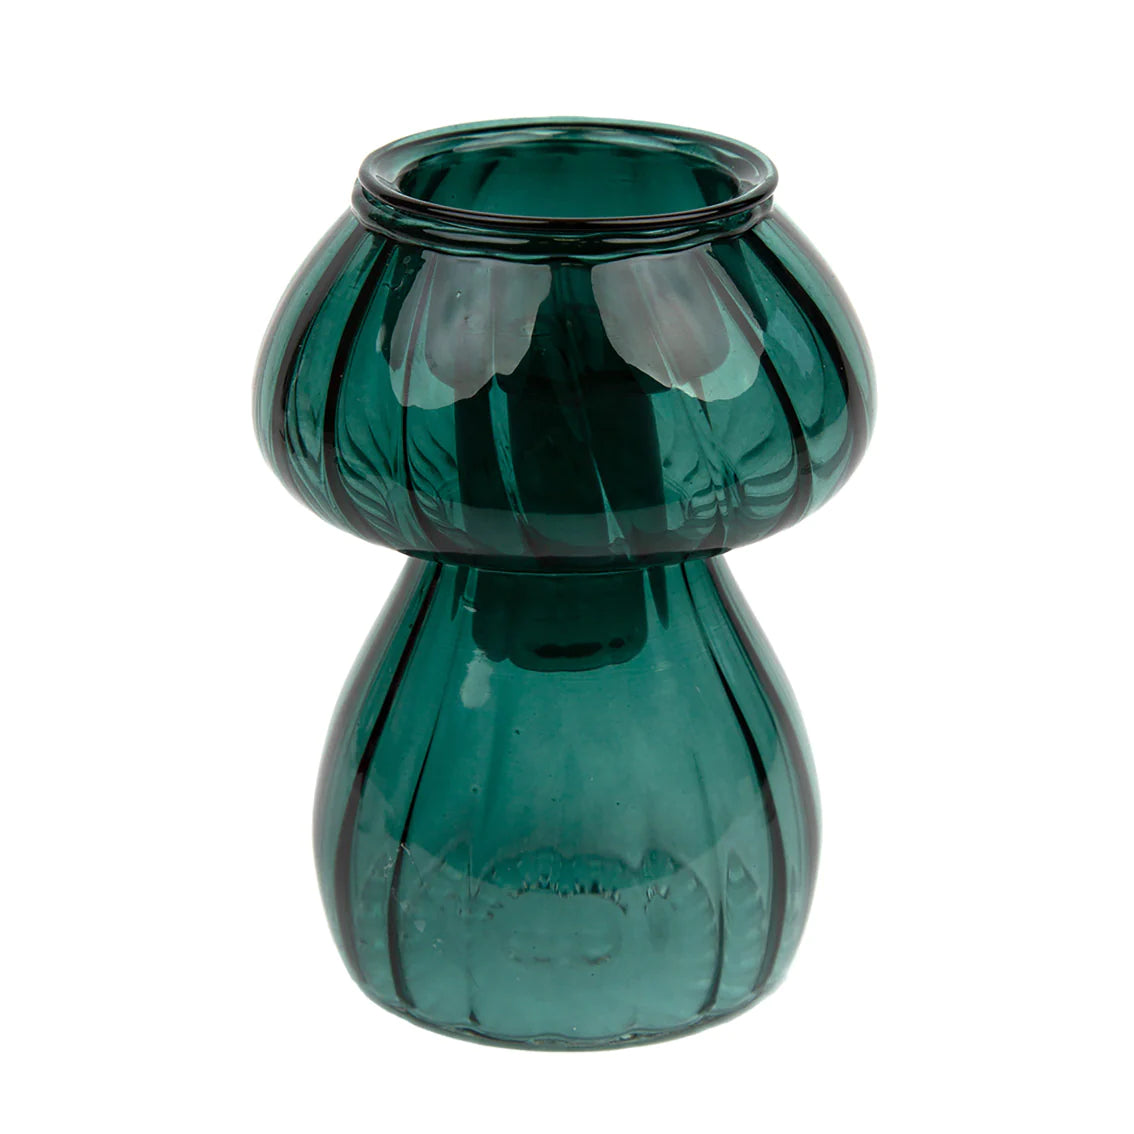 Mushroom shaped glass candle in a dark teal green.